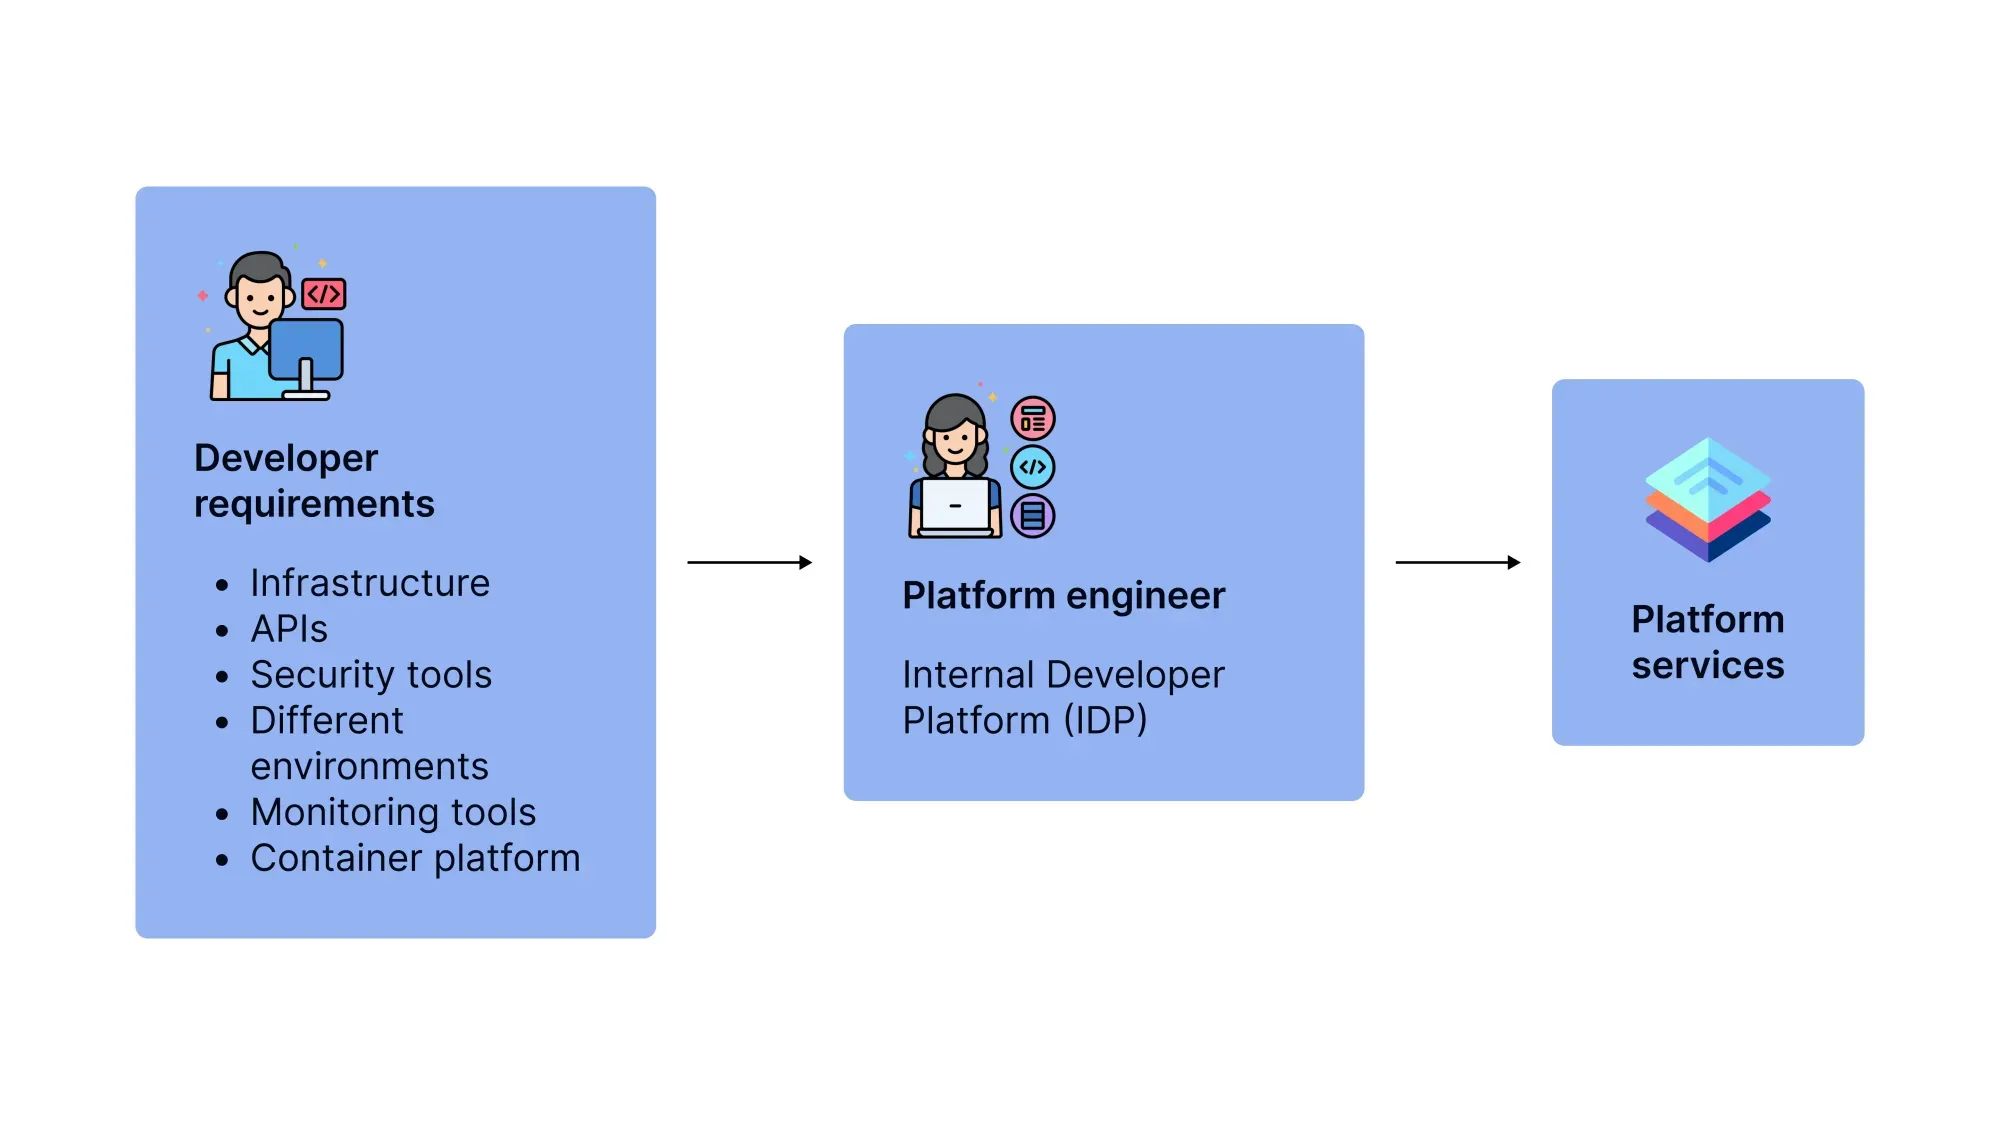 Developer requirements > platform engineer > platform services